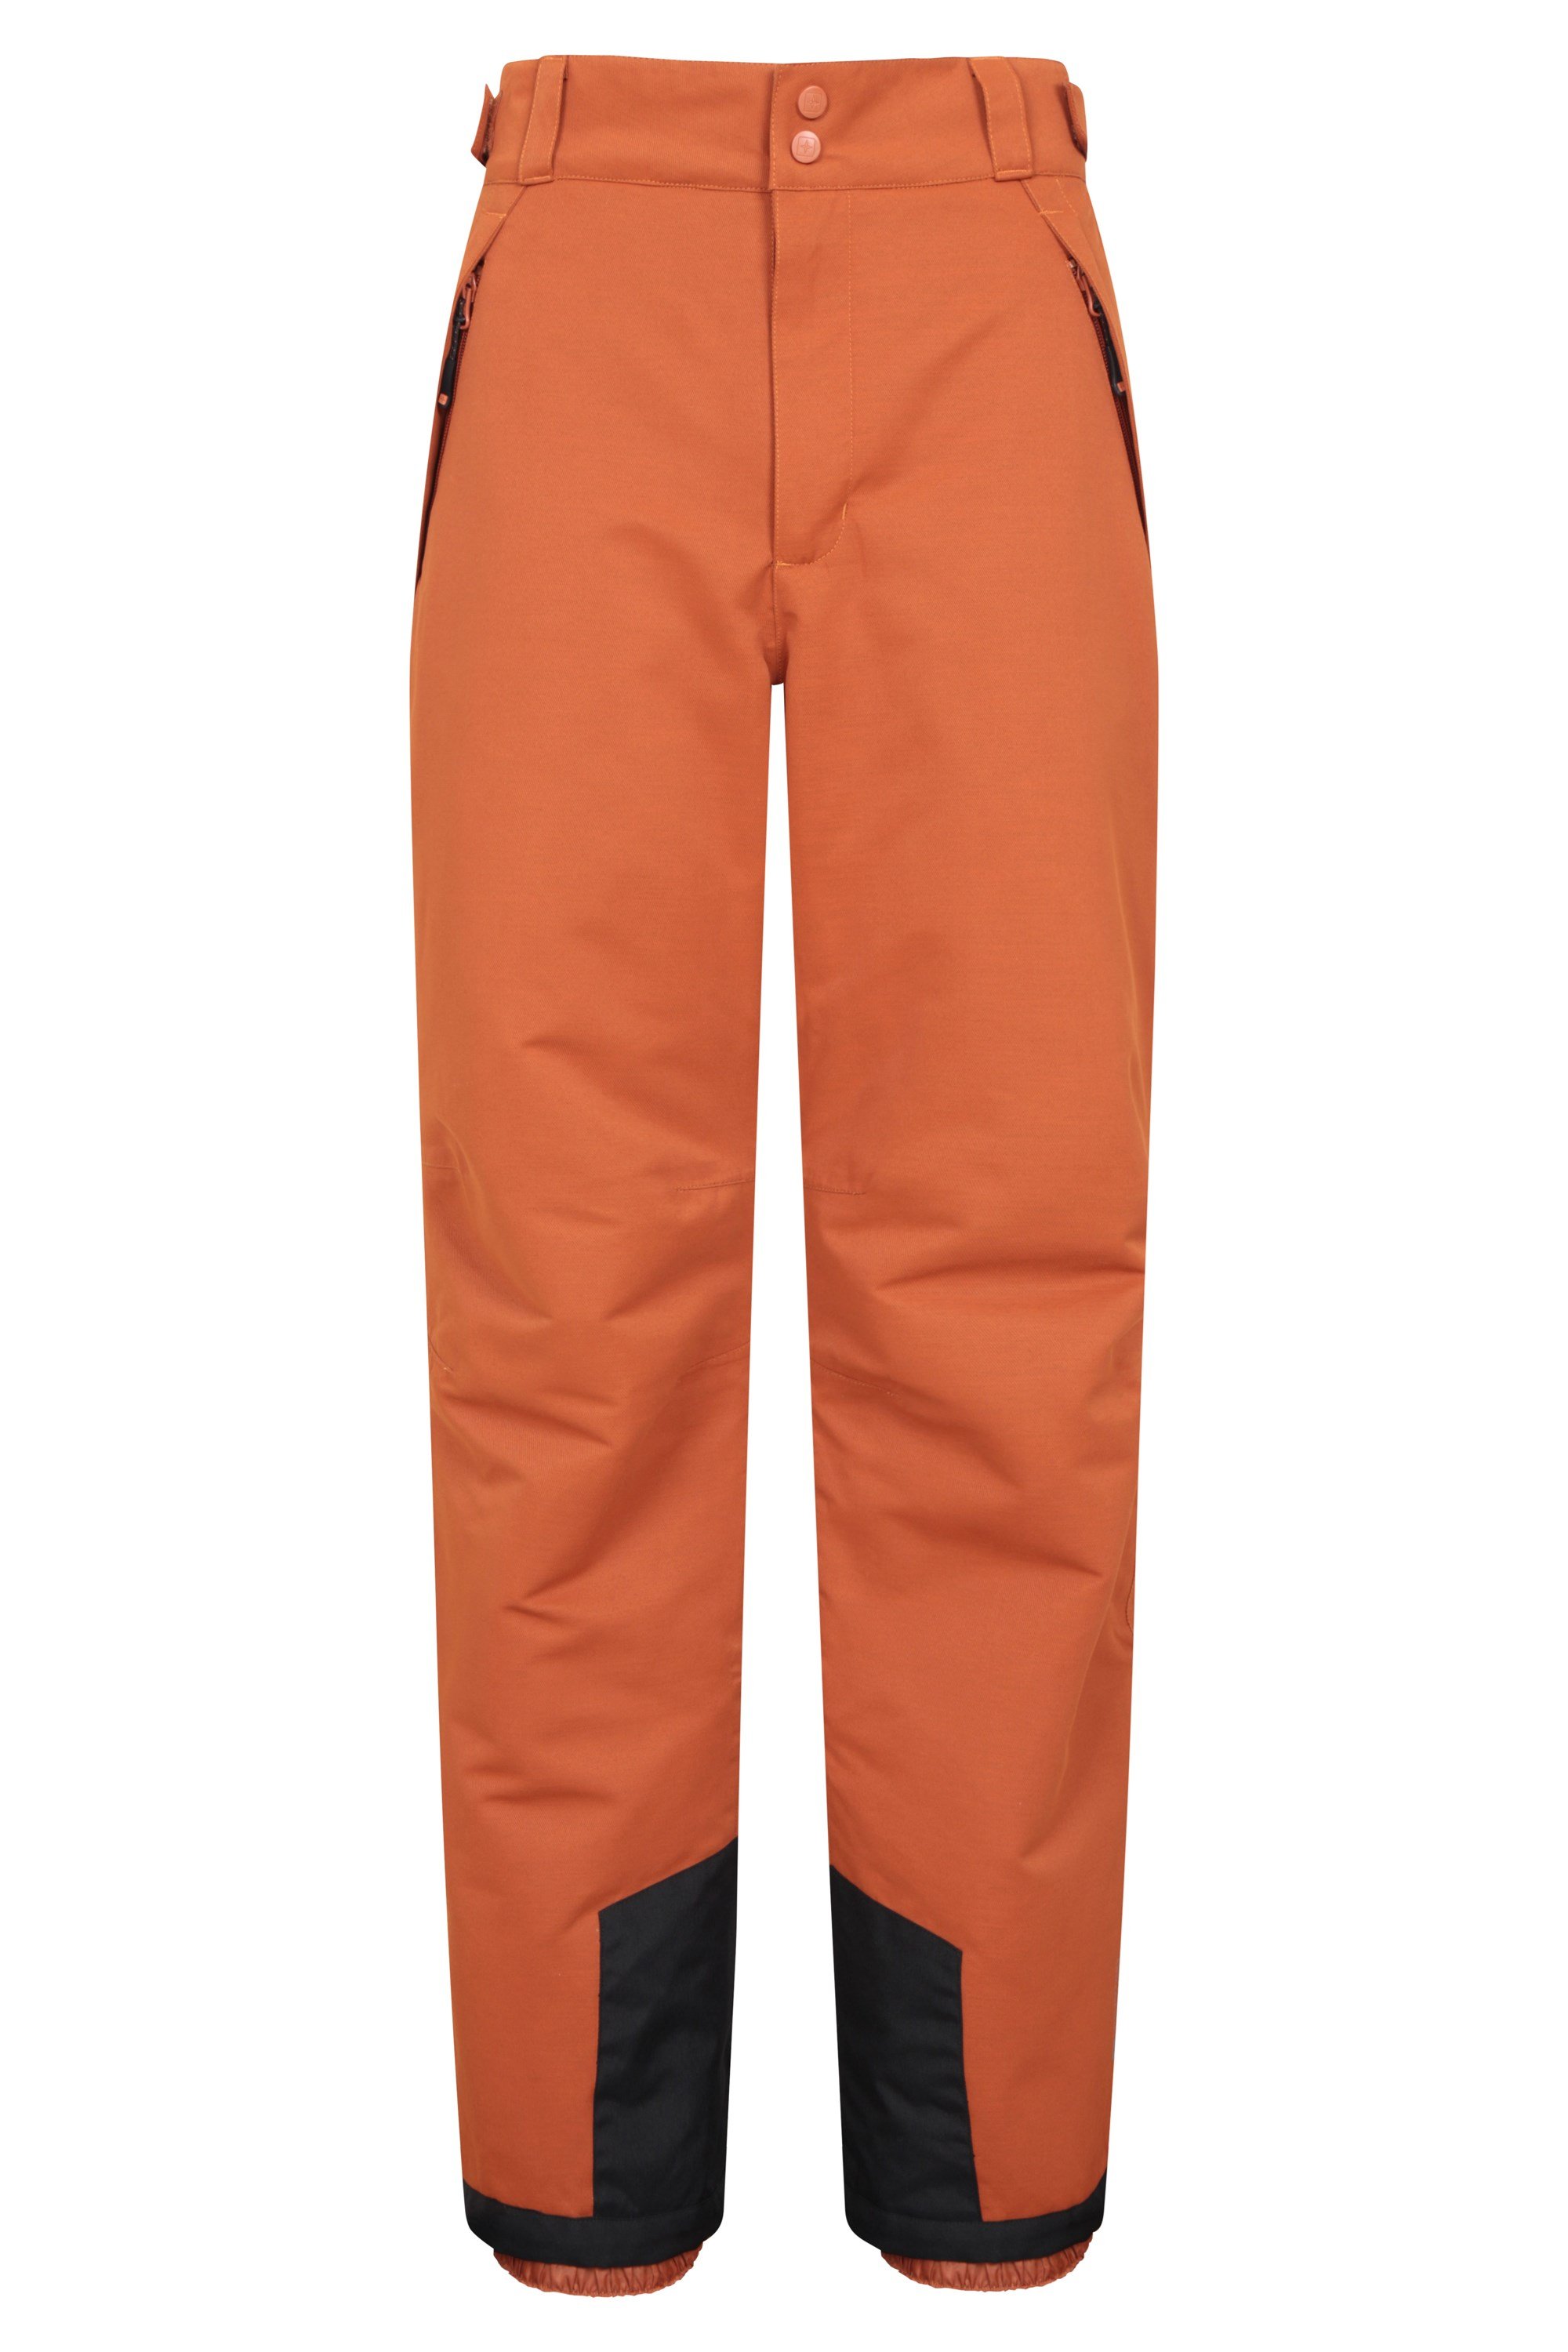 Luna Mens Ski Pants - Short Length - Orange